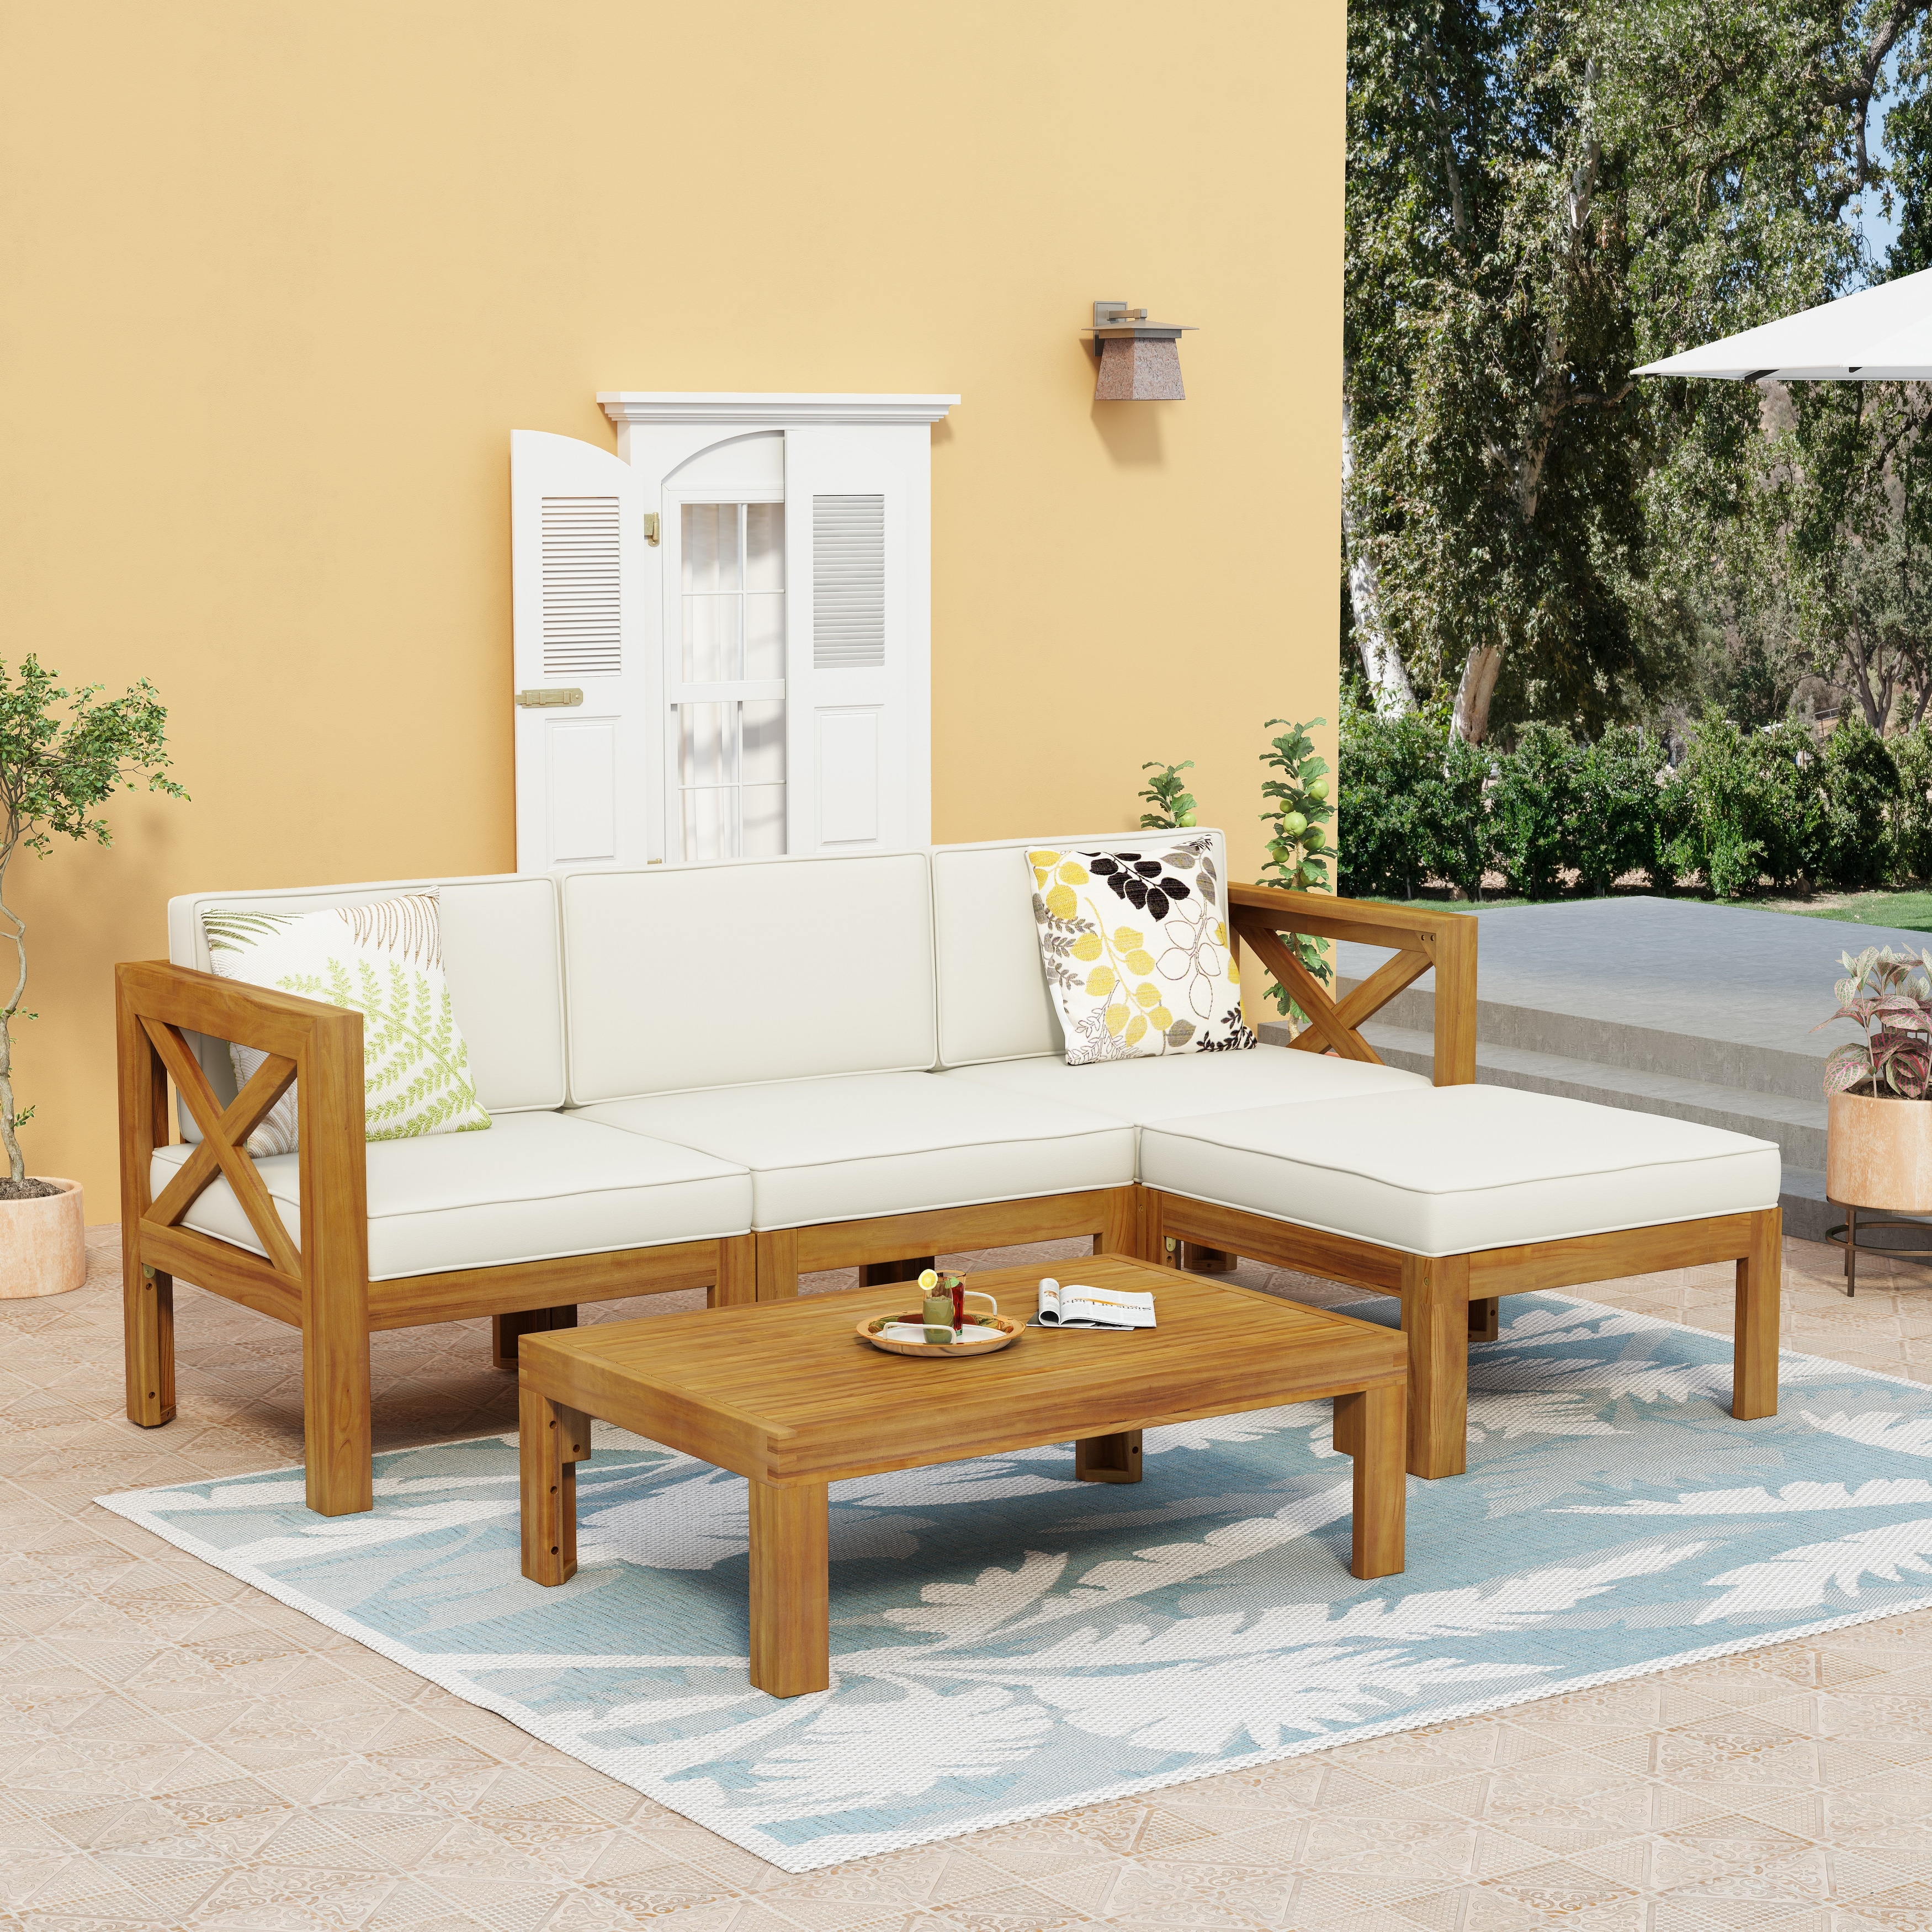 5-piece Patio Wood Sectional Sofa Set